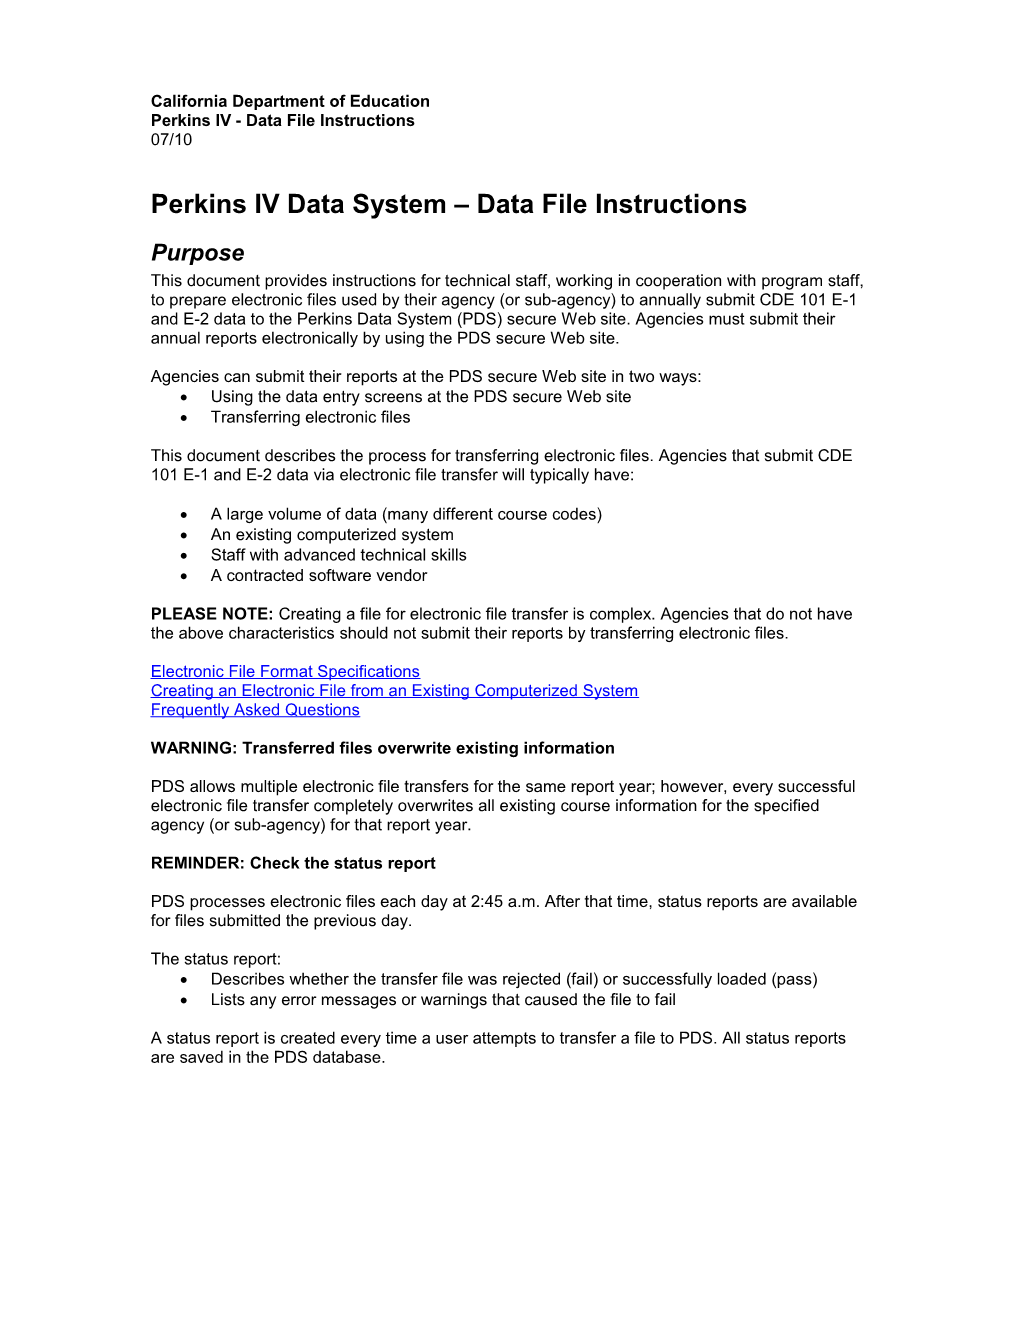 Instructions Perkins IV Electronic File Upload - Perkins (CA Dept of Education)